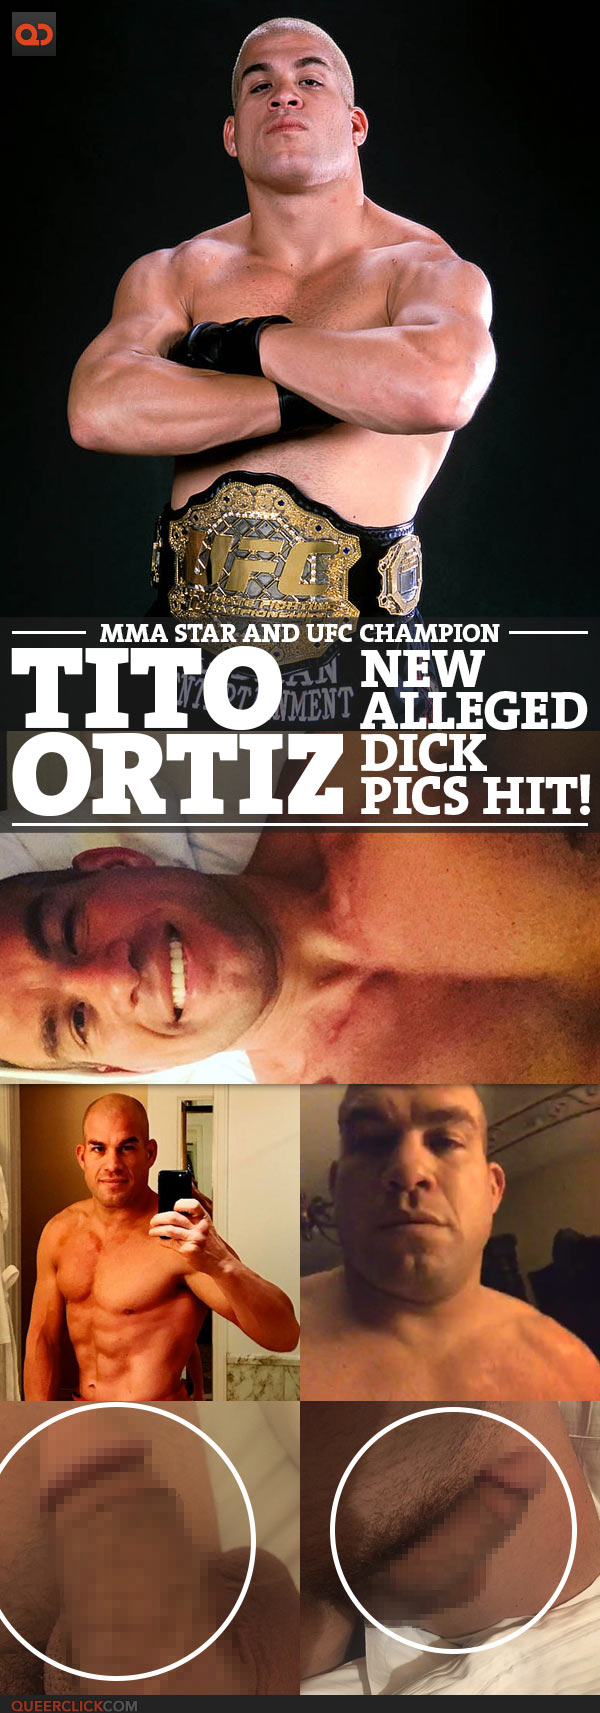 Tito Ortiz, MMA Star And UFC Champion, New Alleged Dick Pics Hit!